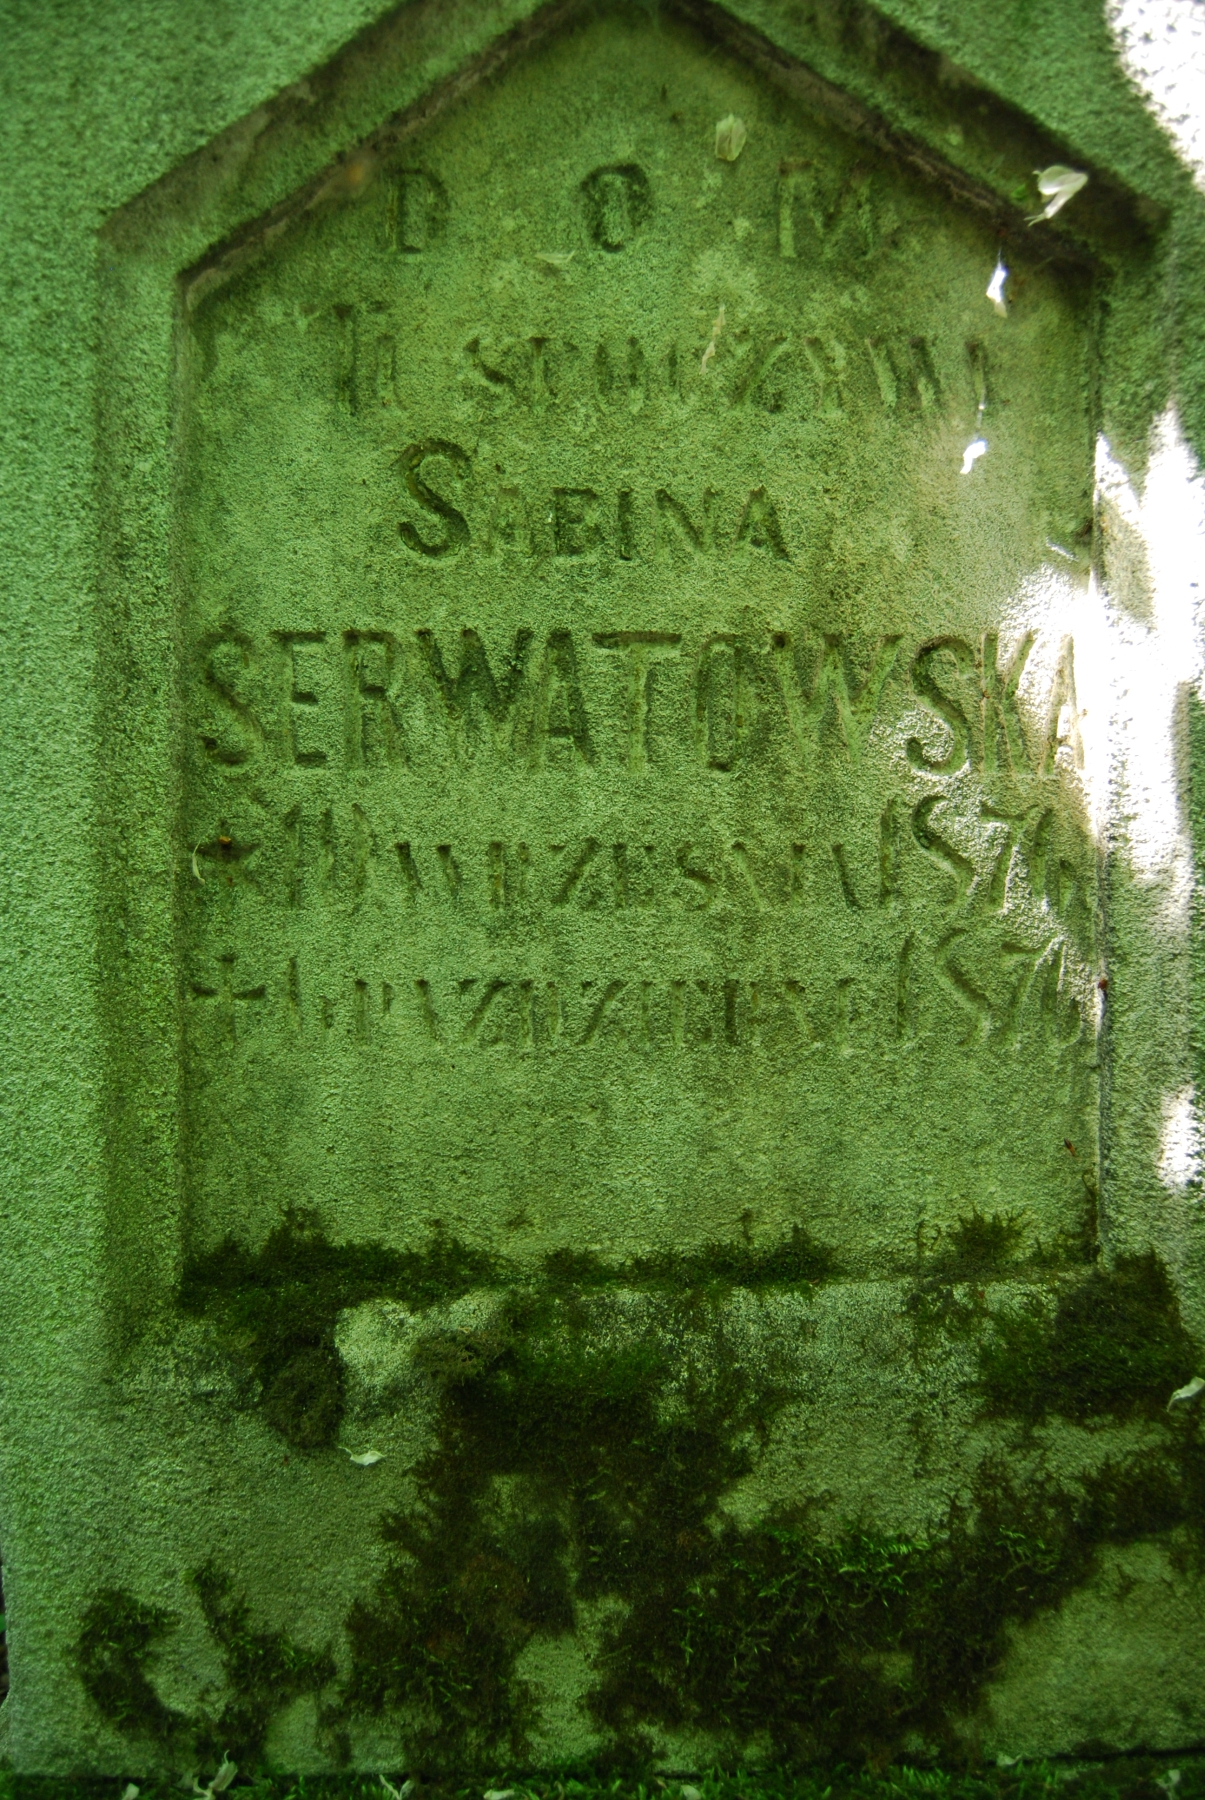 Inscription from the tombstone of Sabina and Wojciech Serwatowski, Bucniowie cemetery